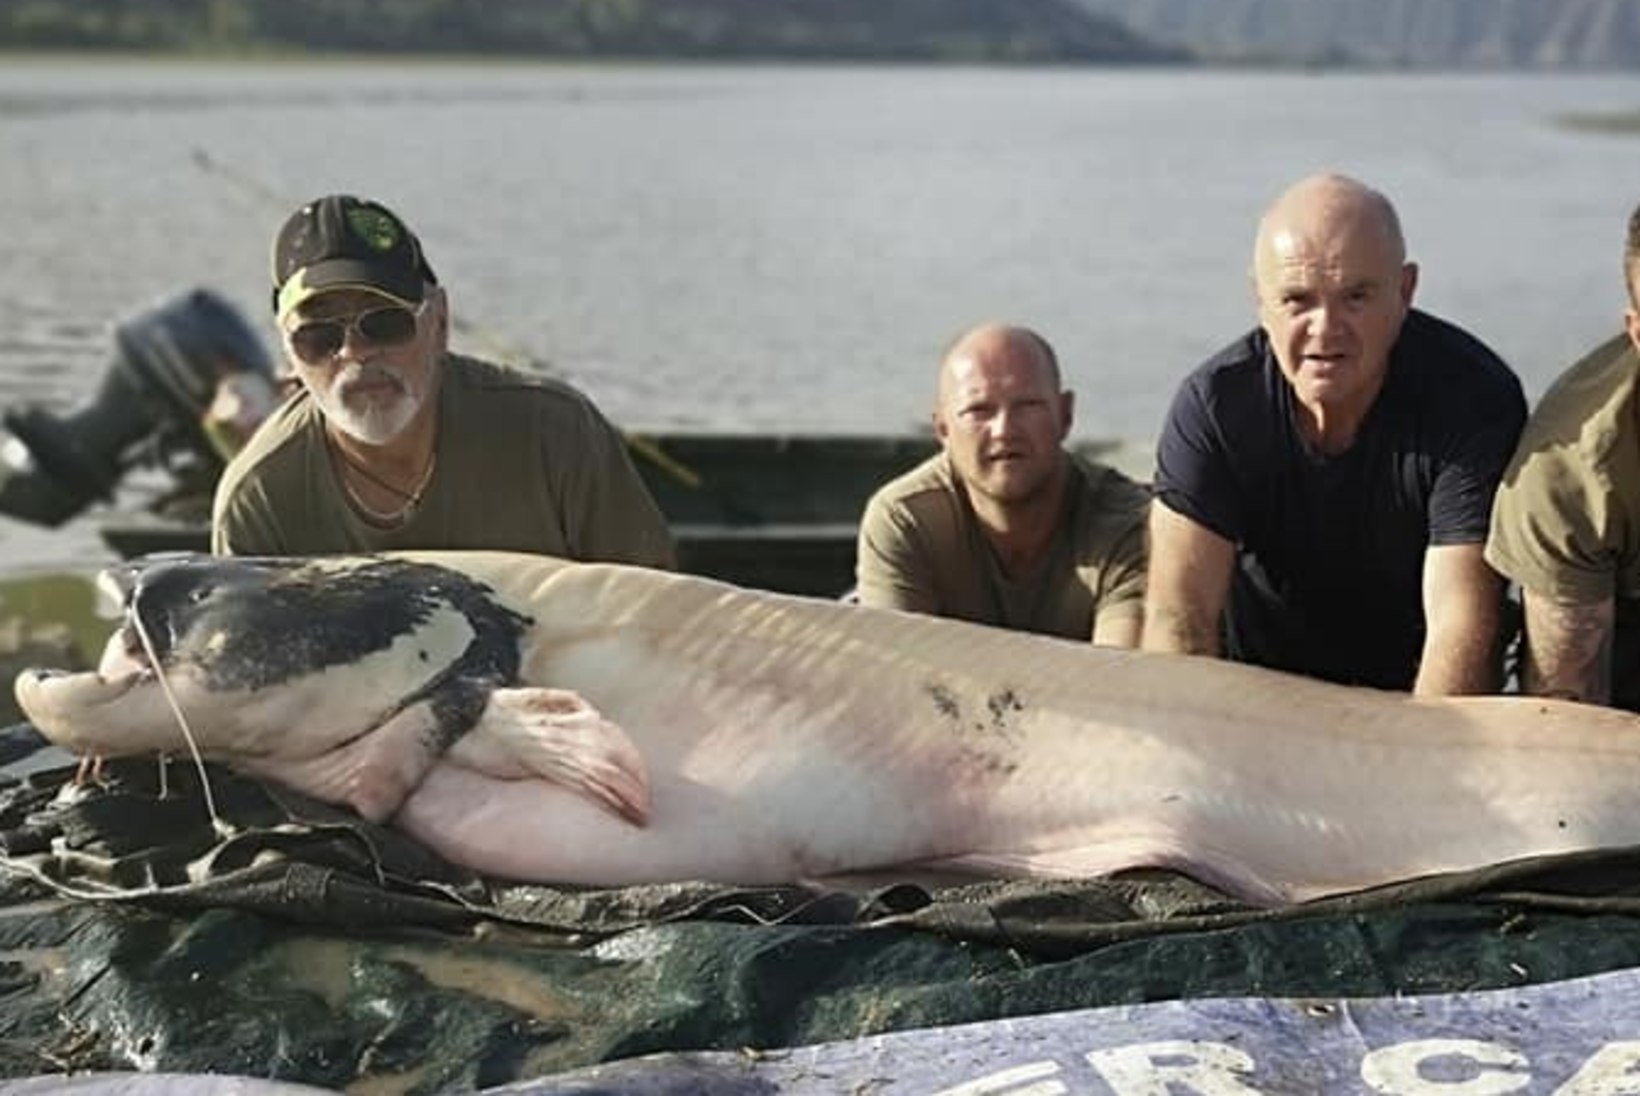 Briti kalamees tabas Euroopa suurima haruldase kala